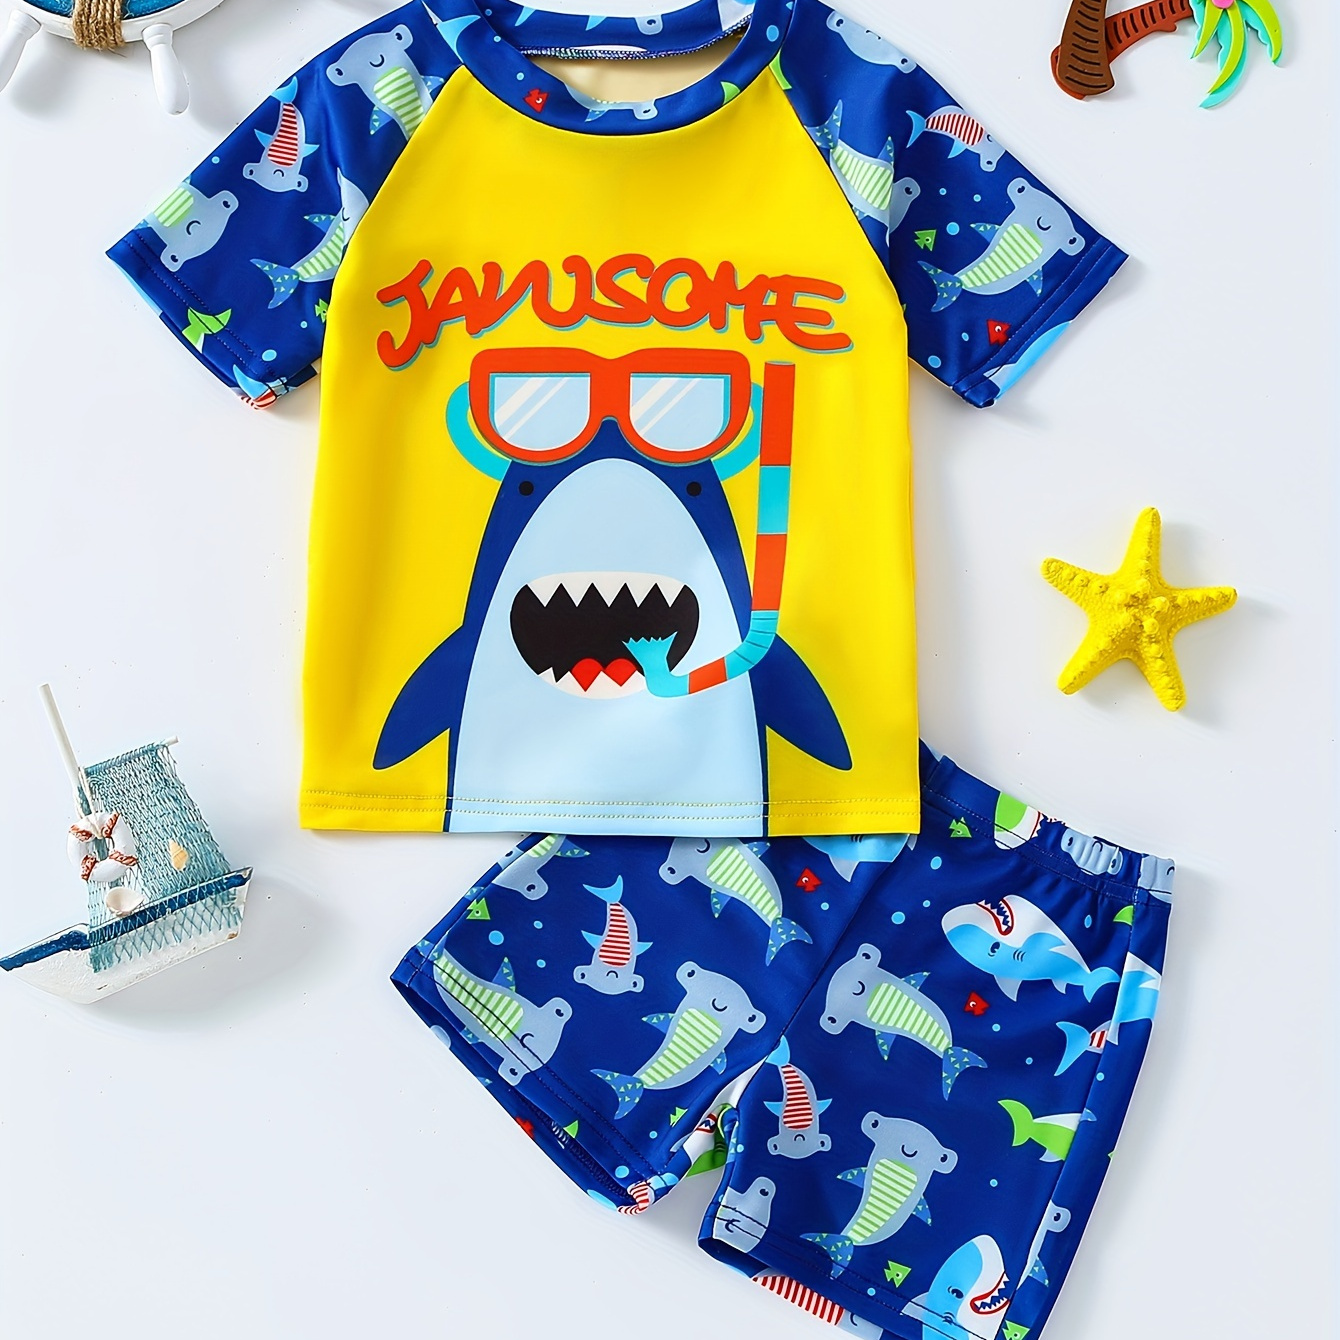 

2pcs Cartoon Shark Pattern Swimsuit For Boys, T-shirt & Swim Trunks Set, Stretchy Surfing Suit, Boys Swimwear For Summer Beach Vacation